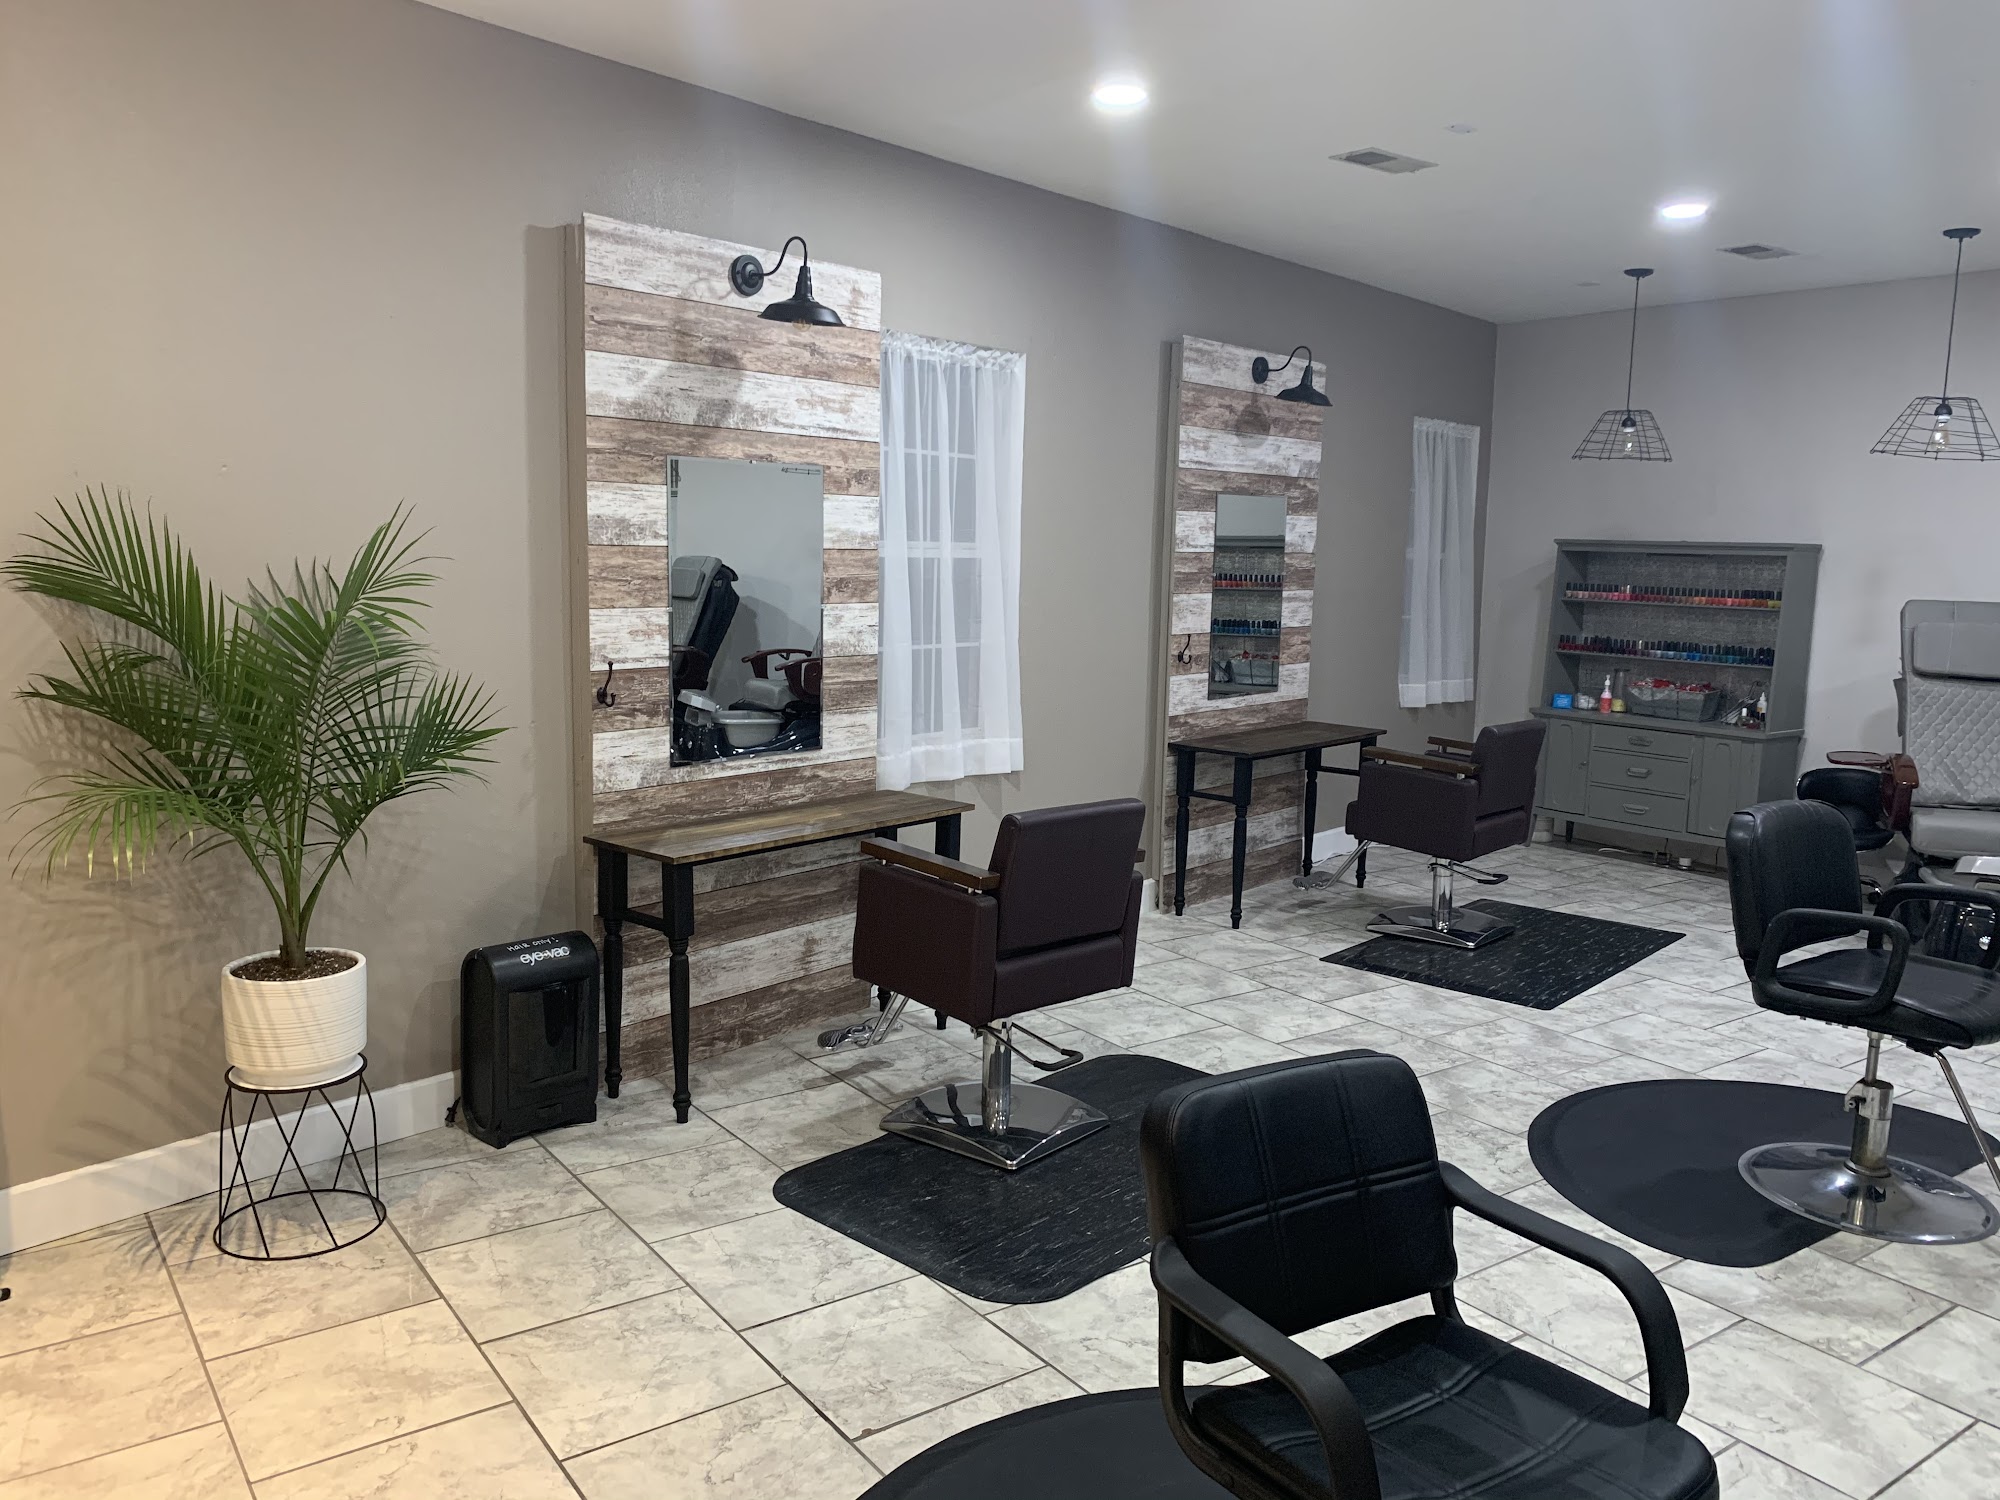 Hairitage Salon and Spa 15767 MO-13 #5, Reeds Spring Missouri 65737